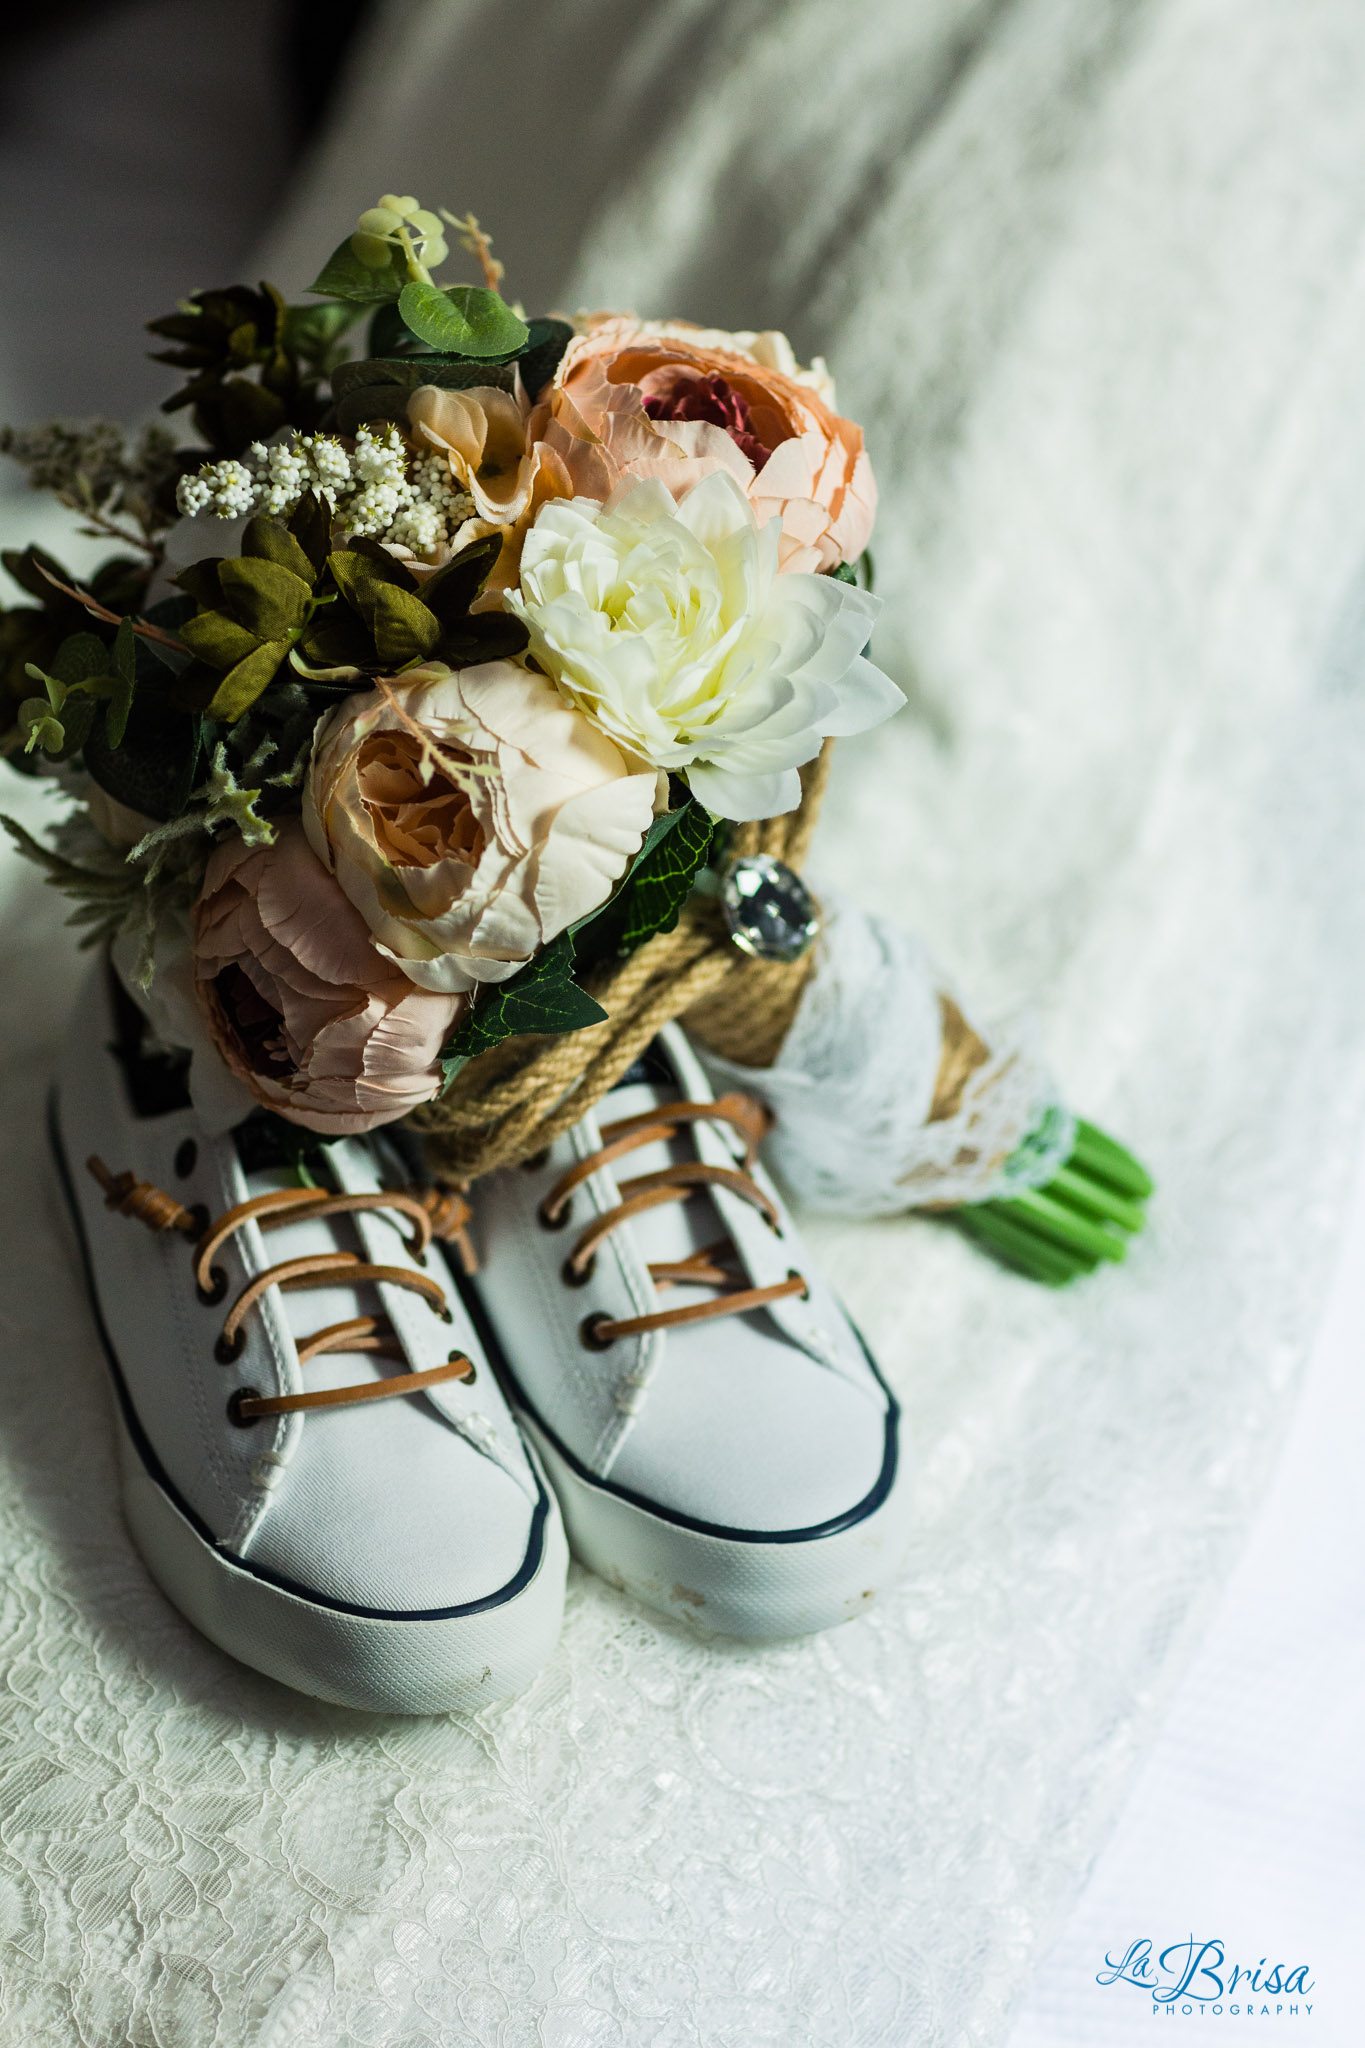 Sperrys wedding shoes & bouquet